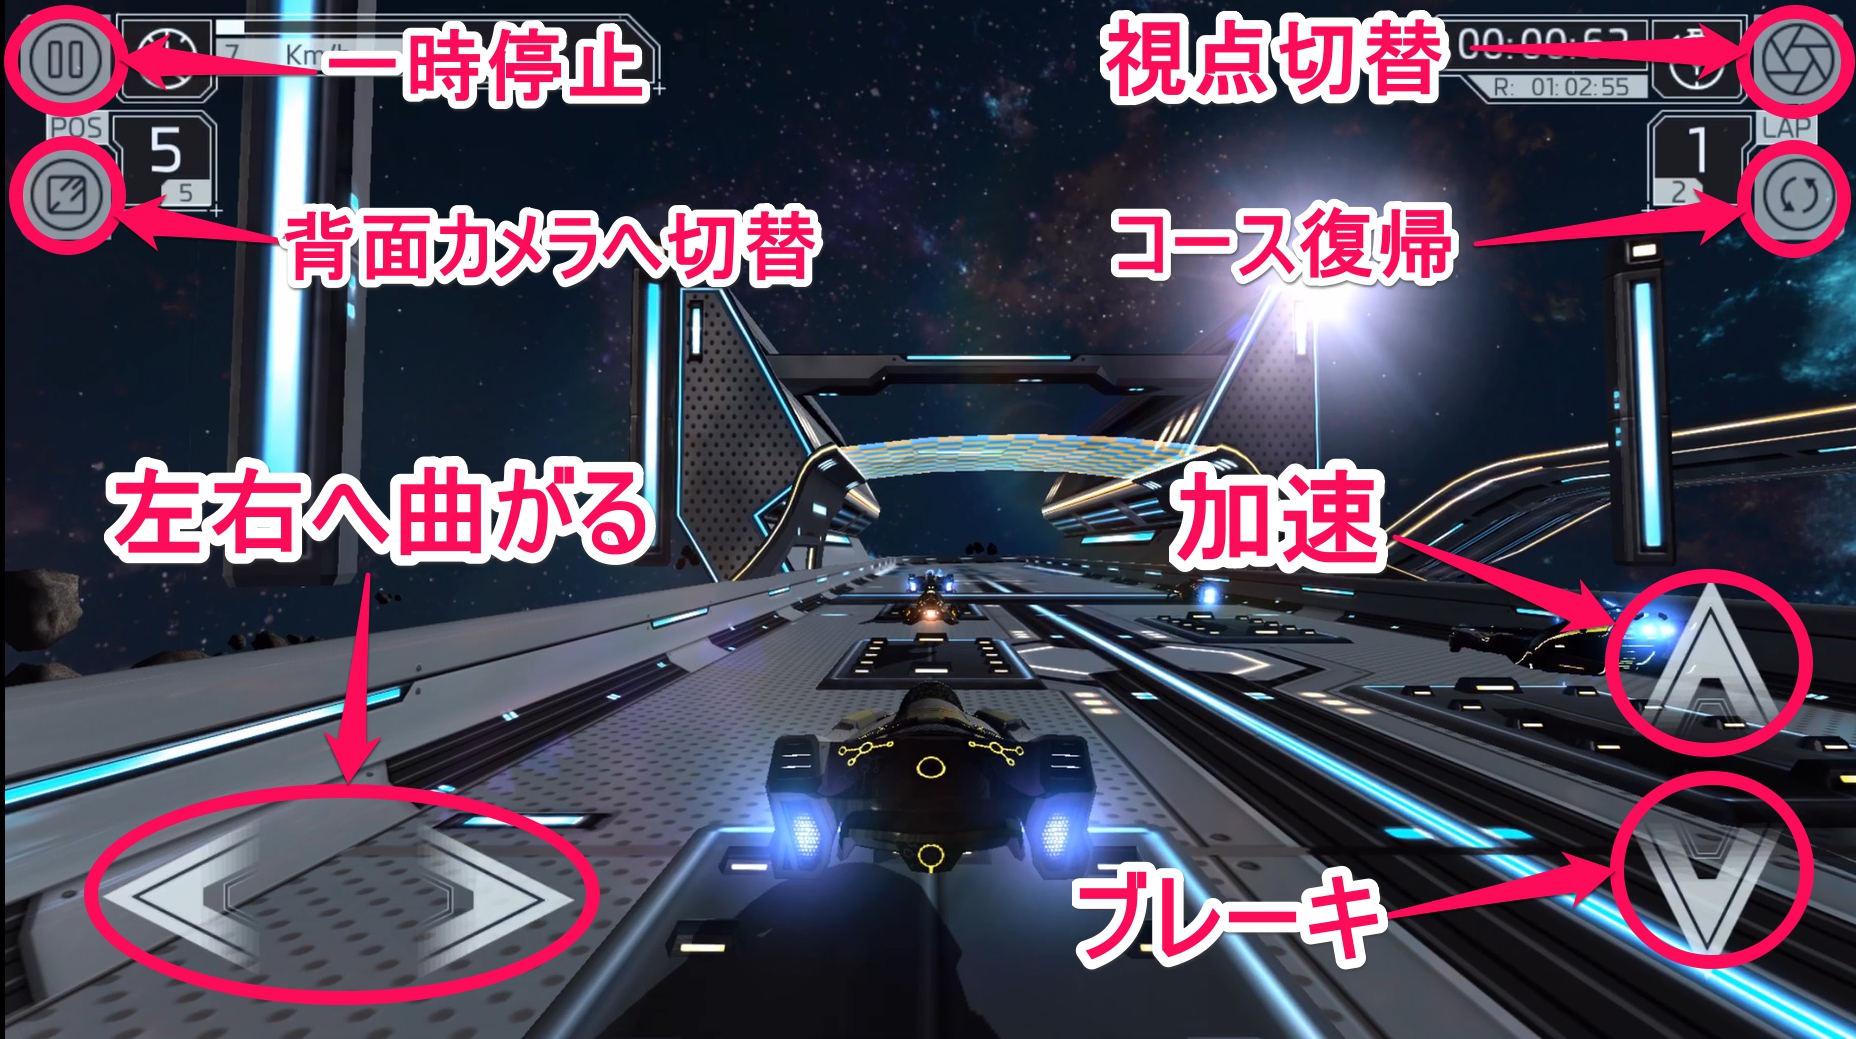 Cosmic Challenge ゲームレビュー Appliv Games